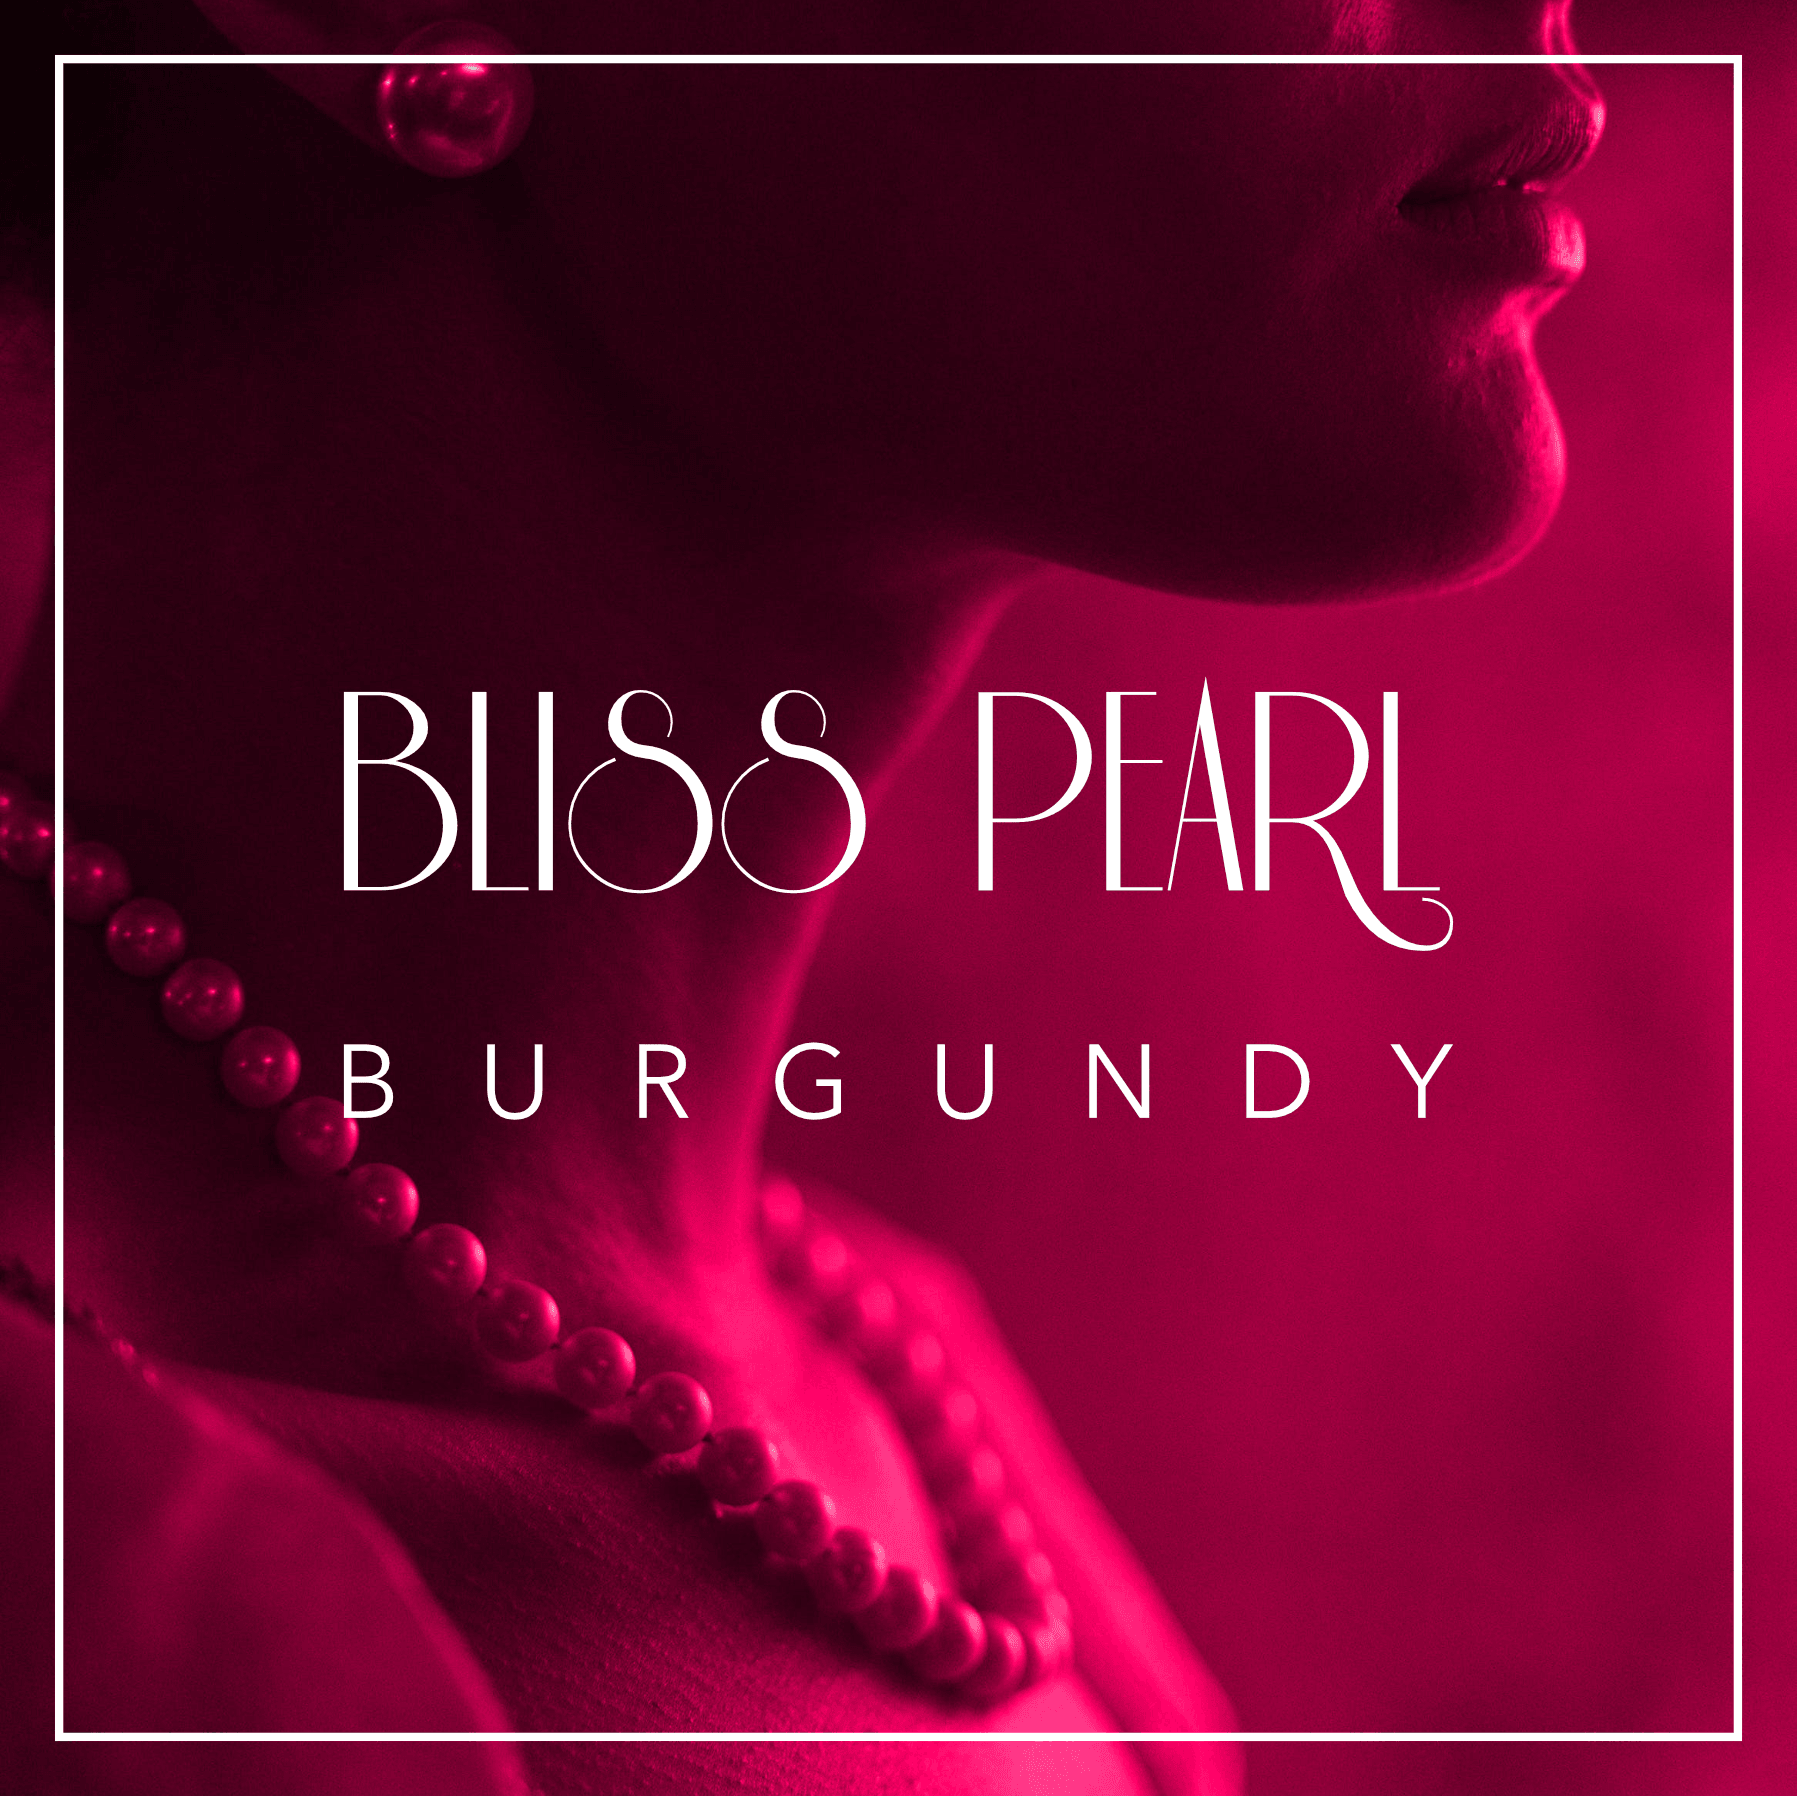 Bliss Pearl Burgundy